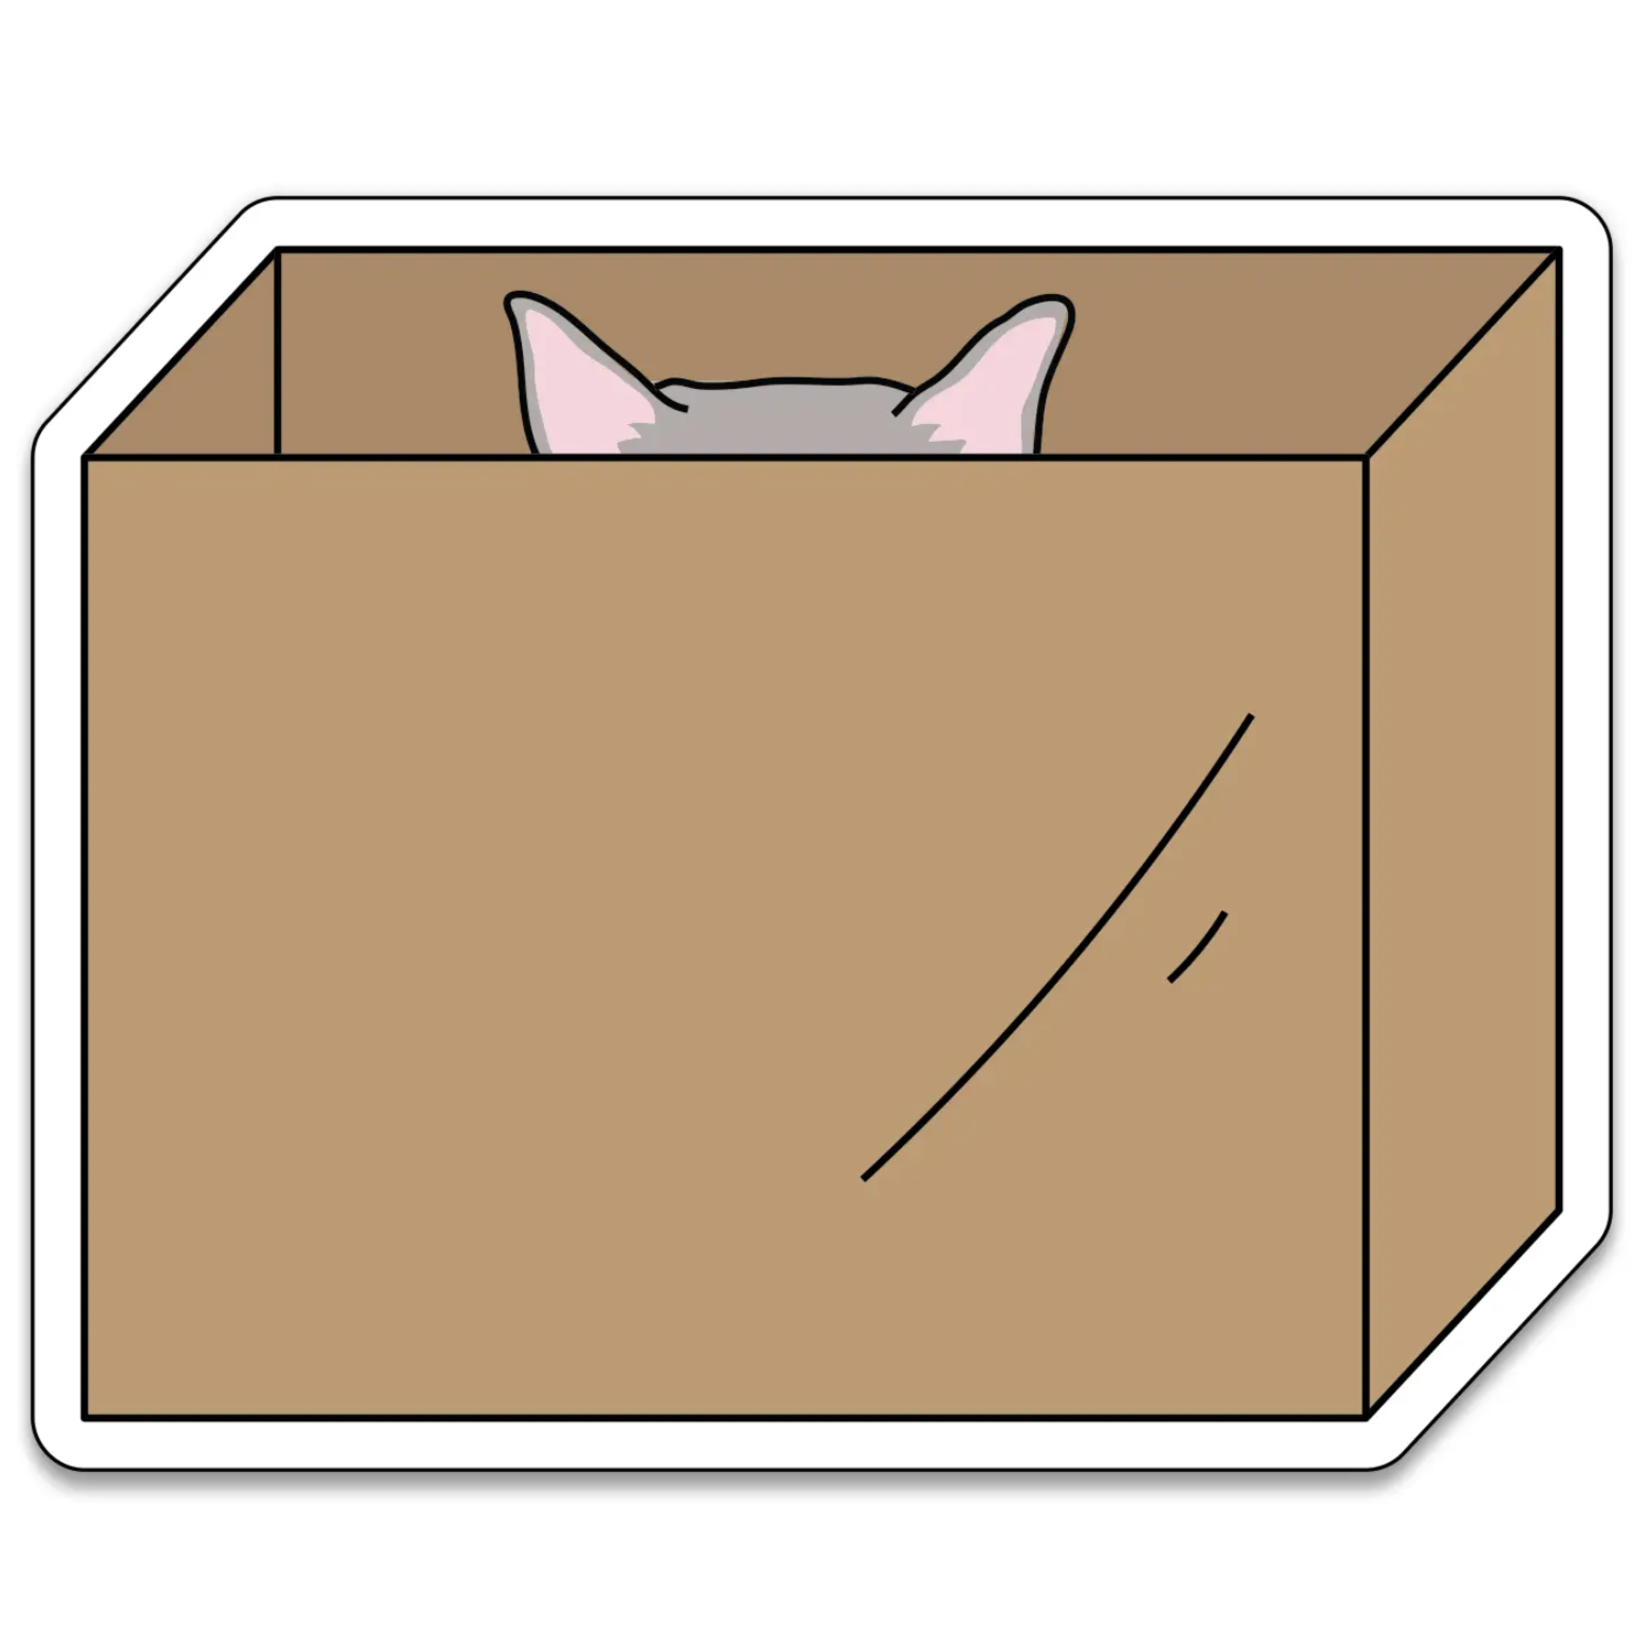 Near Modern Disaster Cat in Box sticker